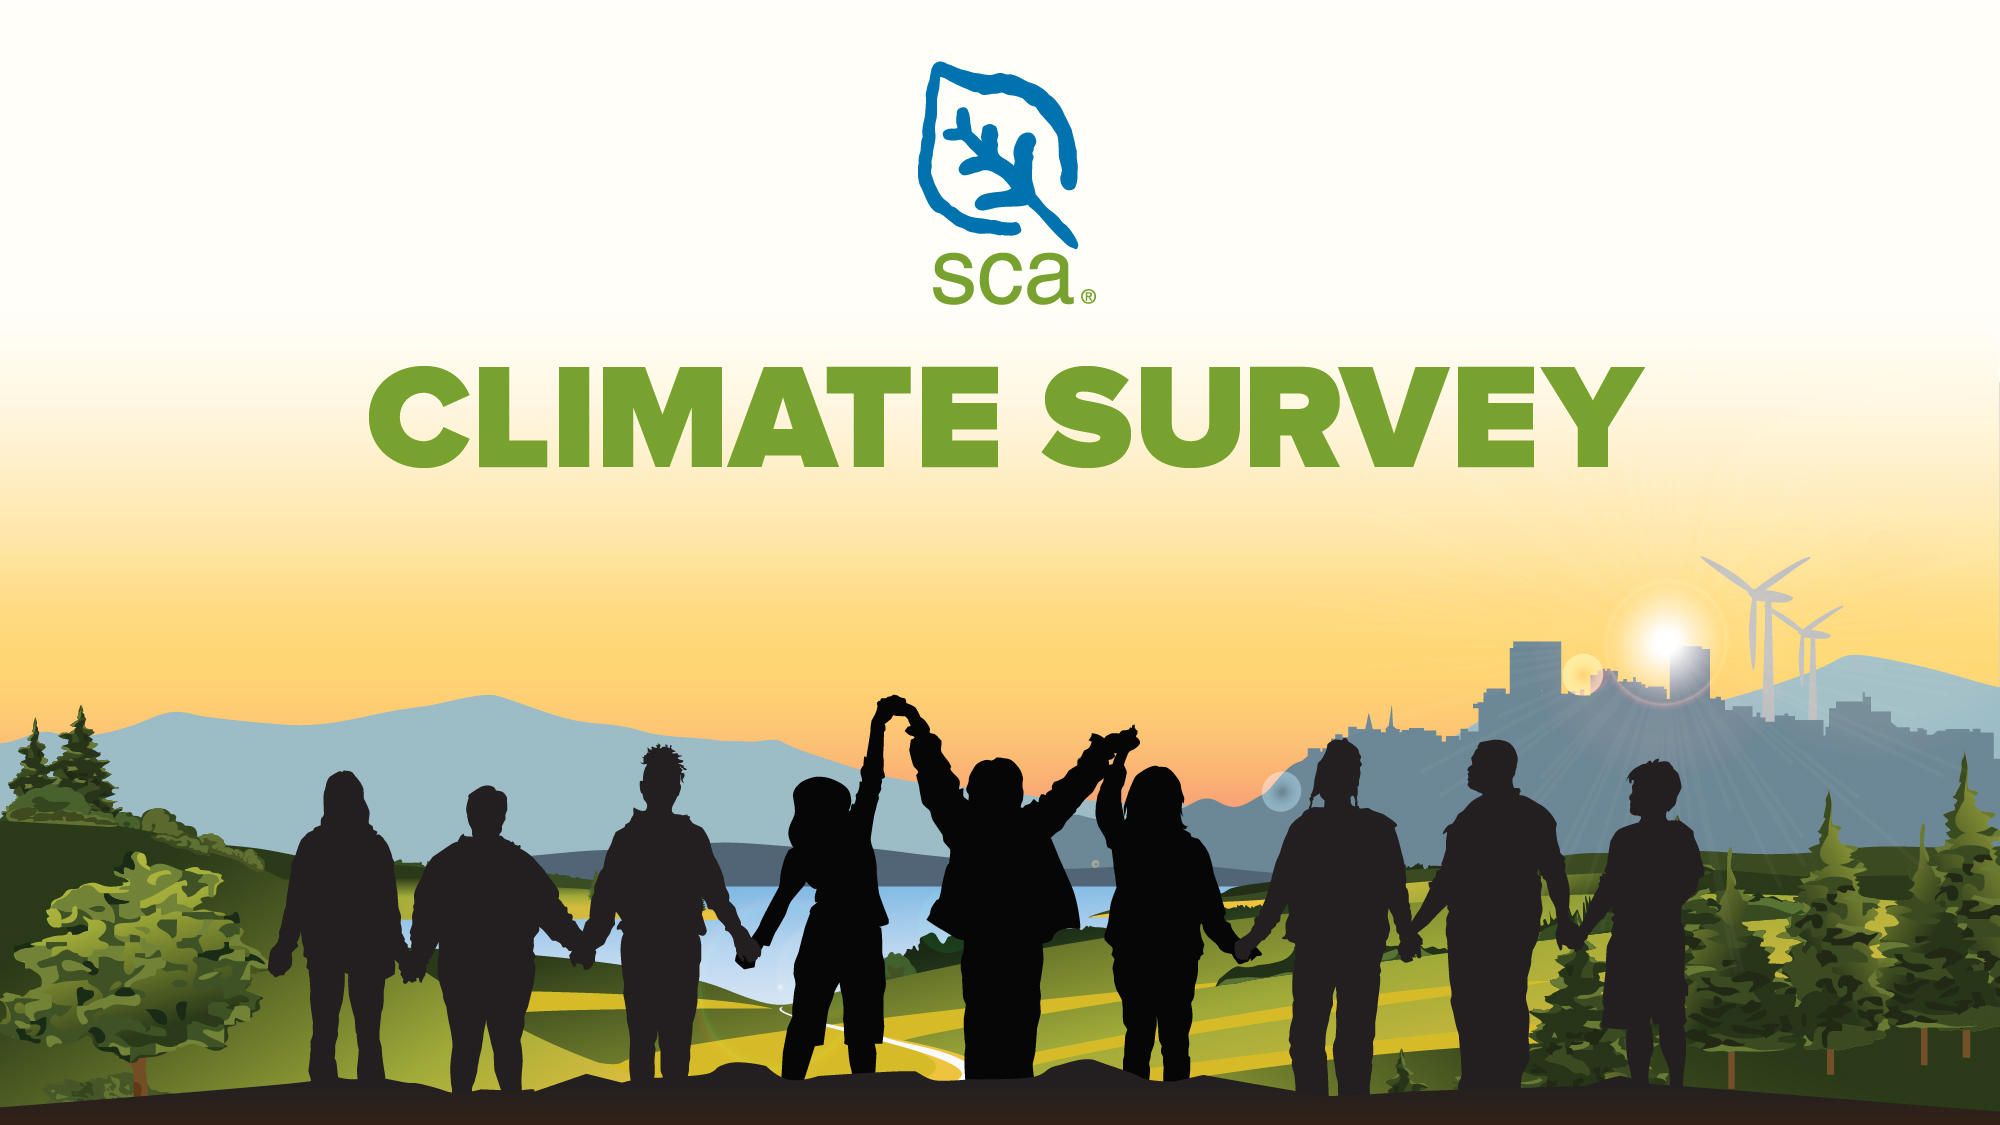 The SCA Climate Survey